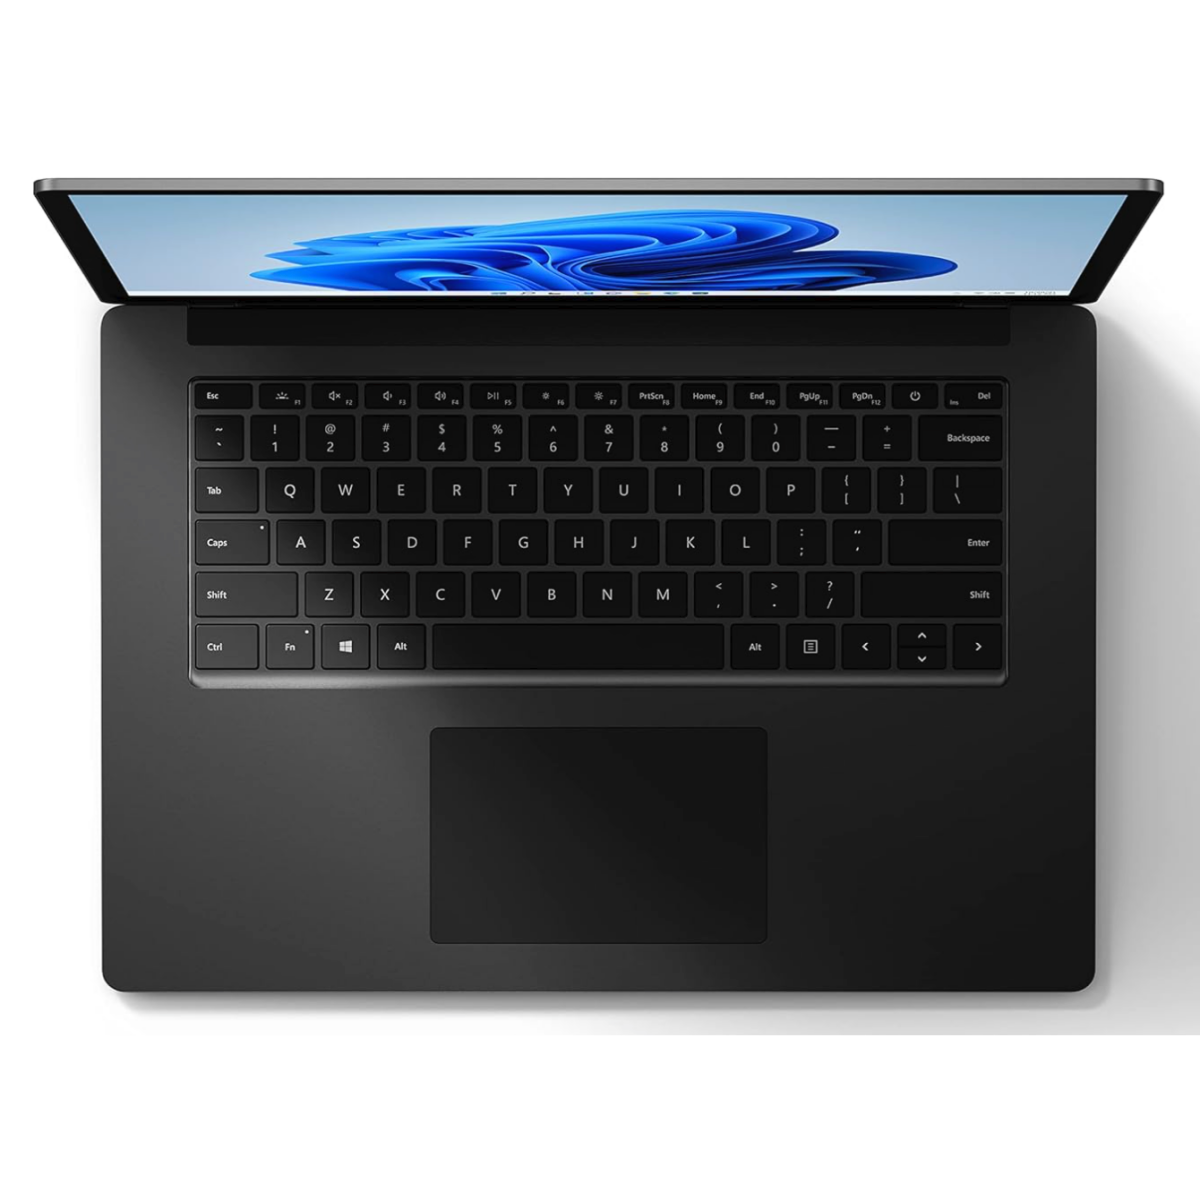 A Microsoft Surface 4 Laptop